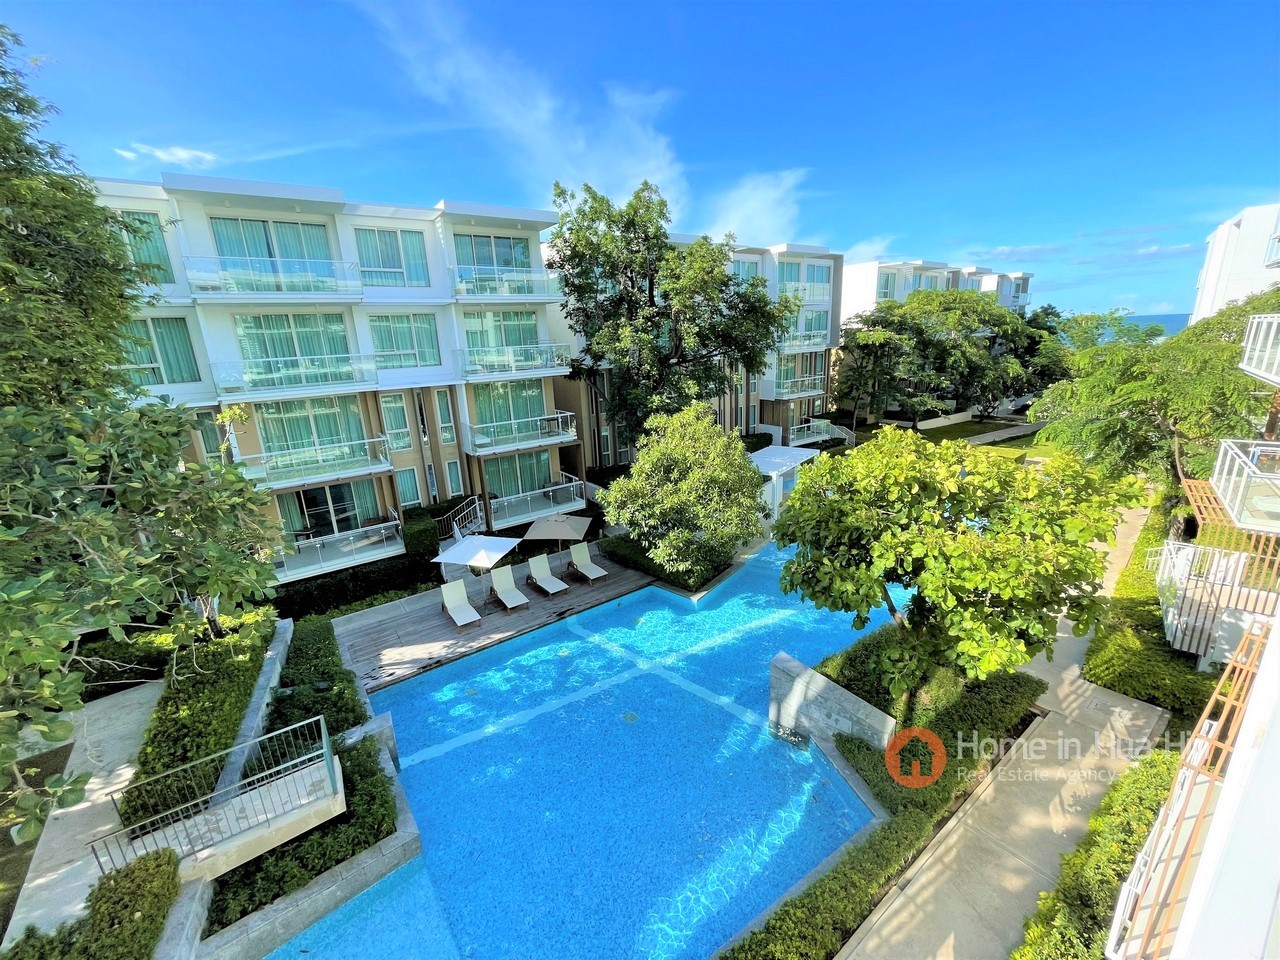 Hua Hin Apartment, Beach Front Condo For Sale